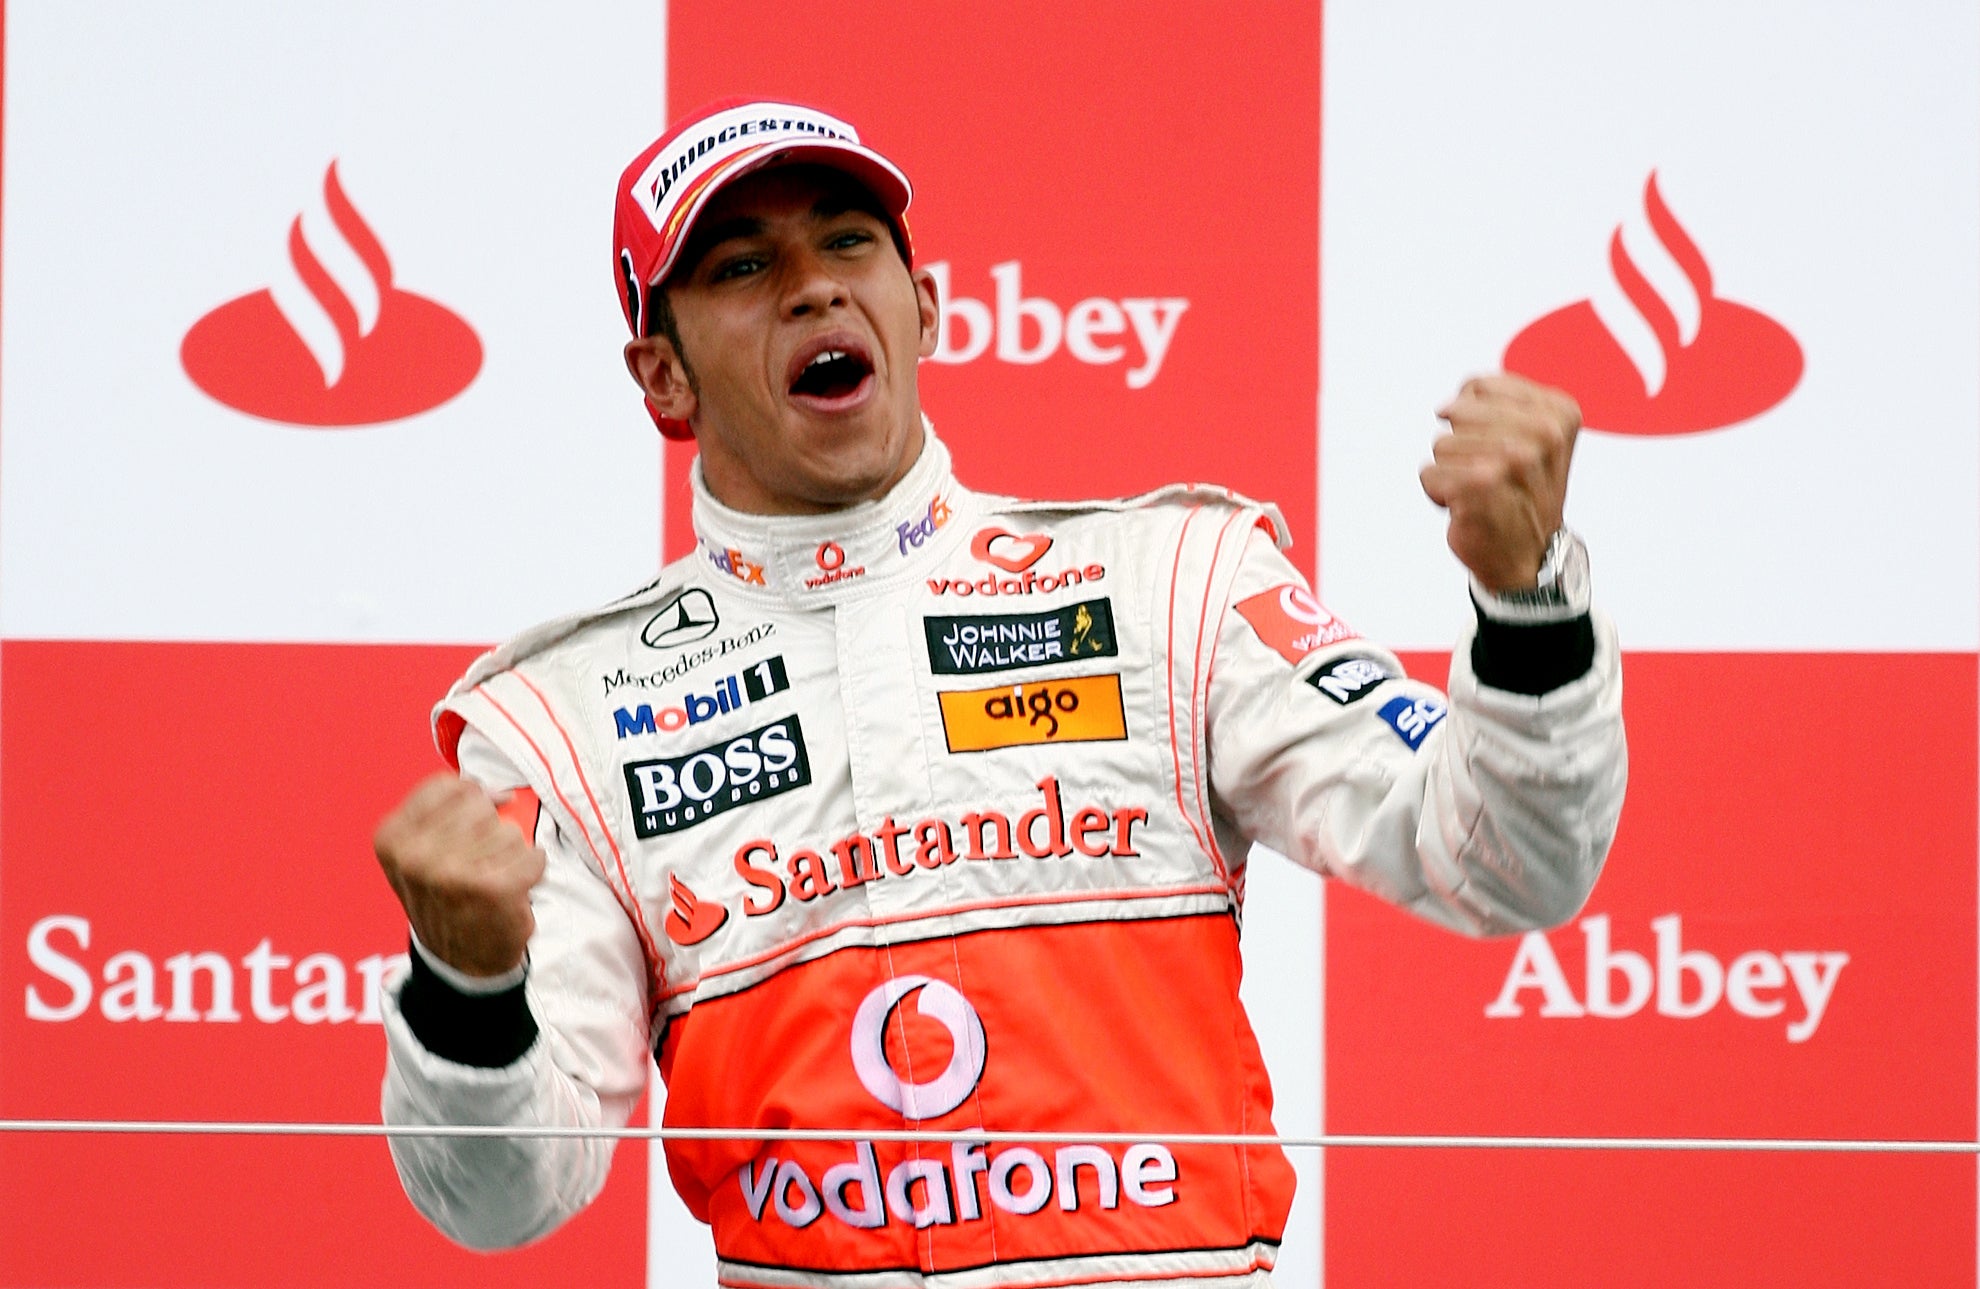 Lewis Hamilton celebrated after winning the 2008 British Grand Prix (David Davies/PA)